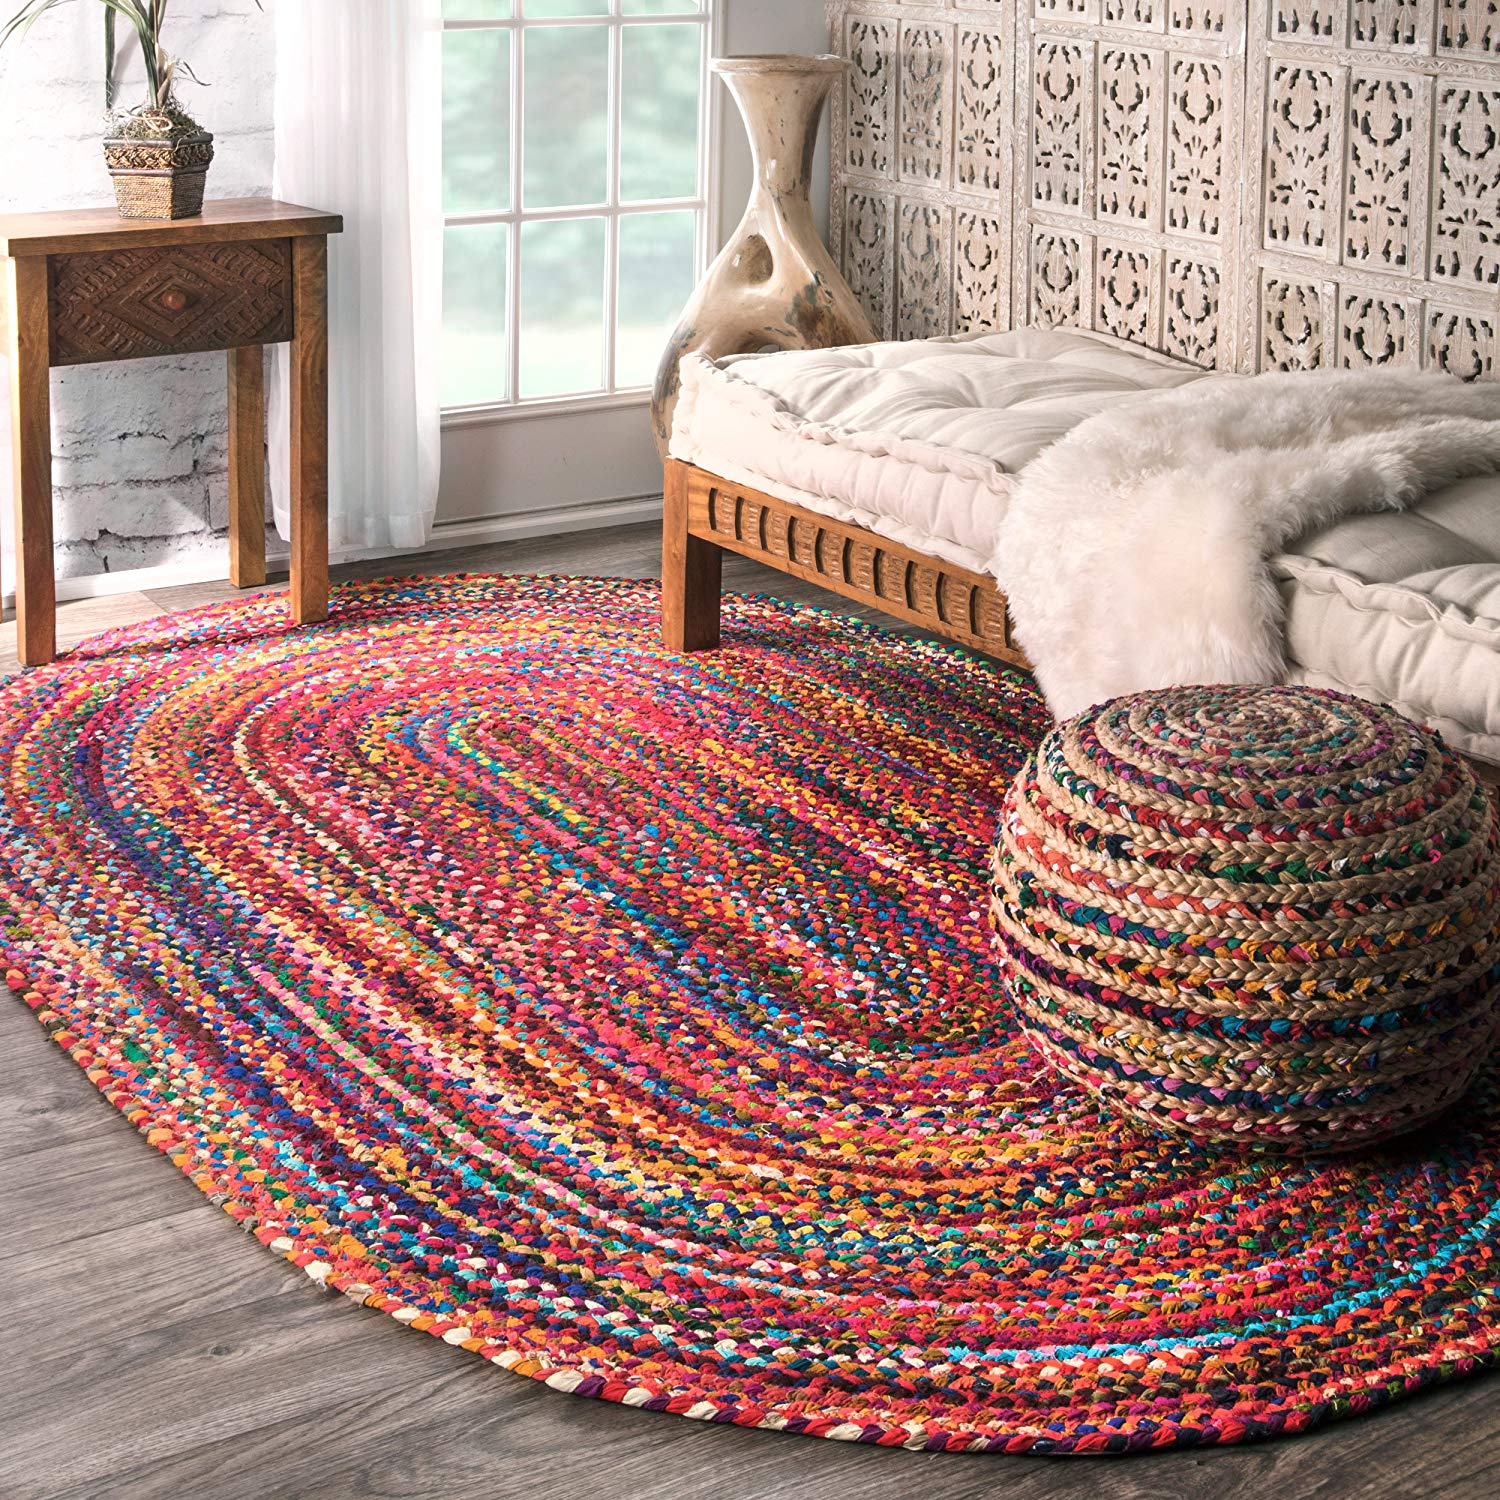 How to buy a handmade rug?